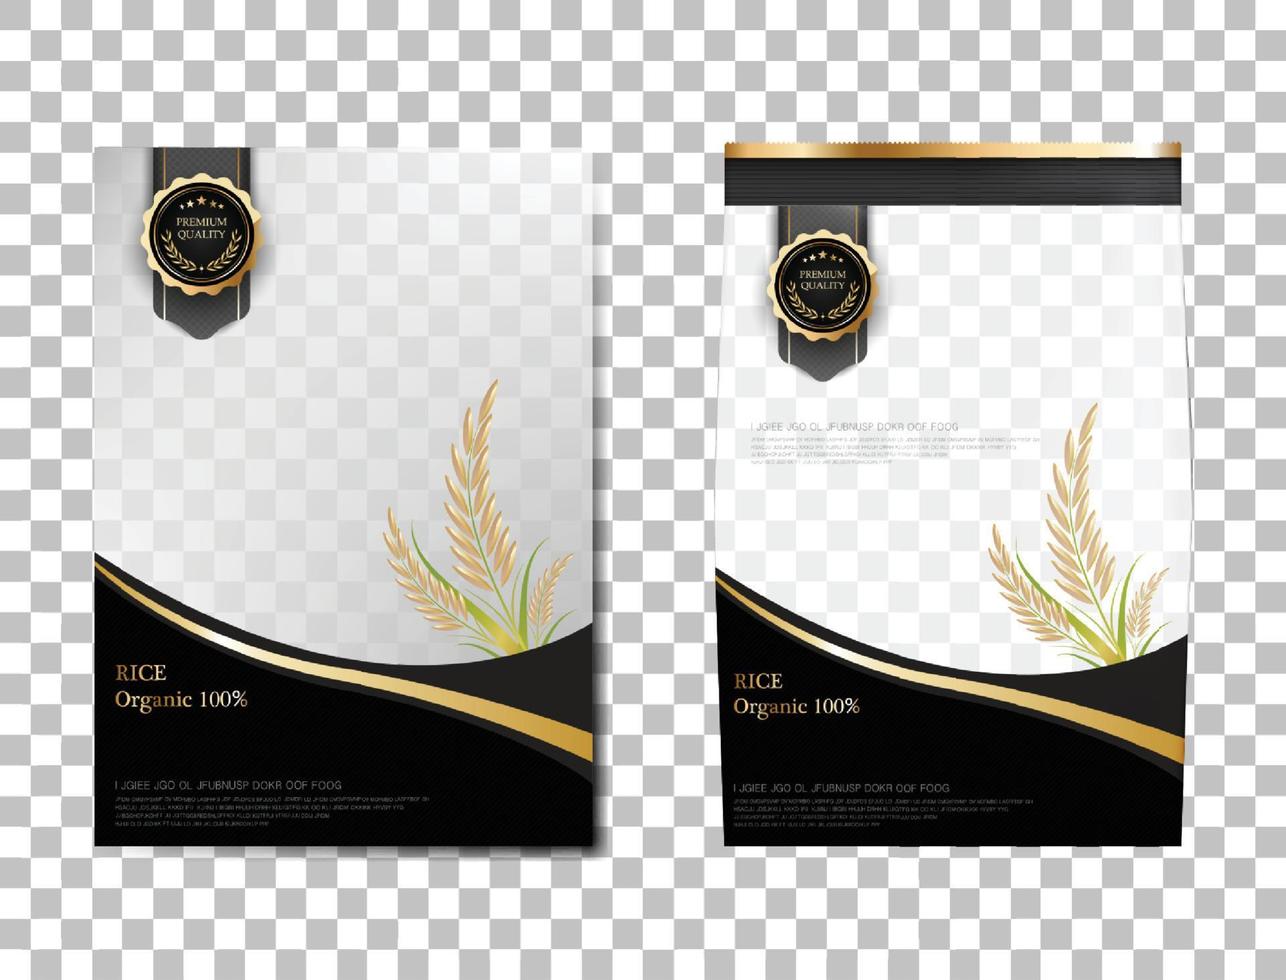 rispaket thailand livsmedelsprodukter, svart guld banner och affisch mall vektor design ris.